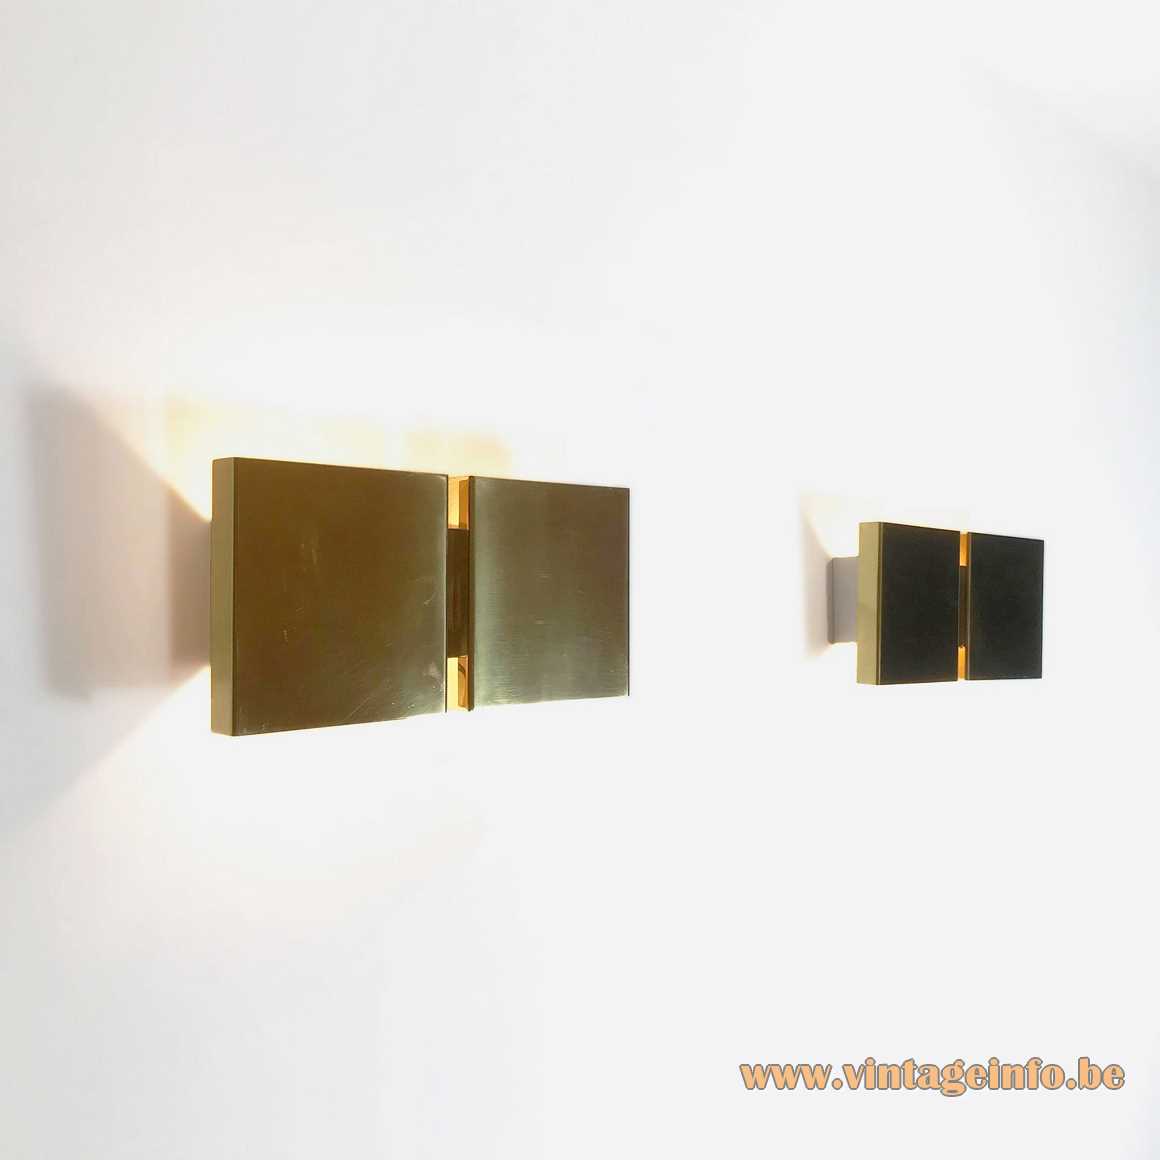 Christophe Gevers brass cubistic wall lamps 1970s Light OLight E14 sockets MCM Belgium